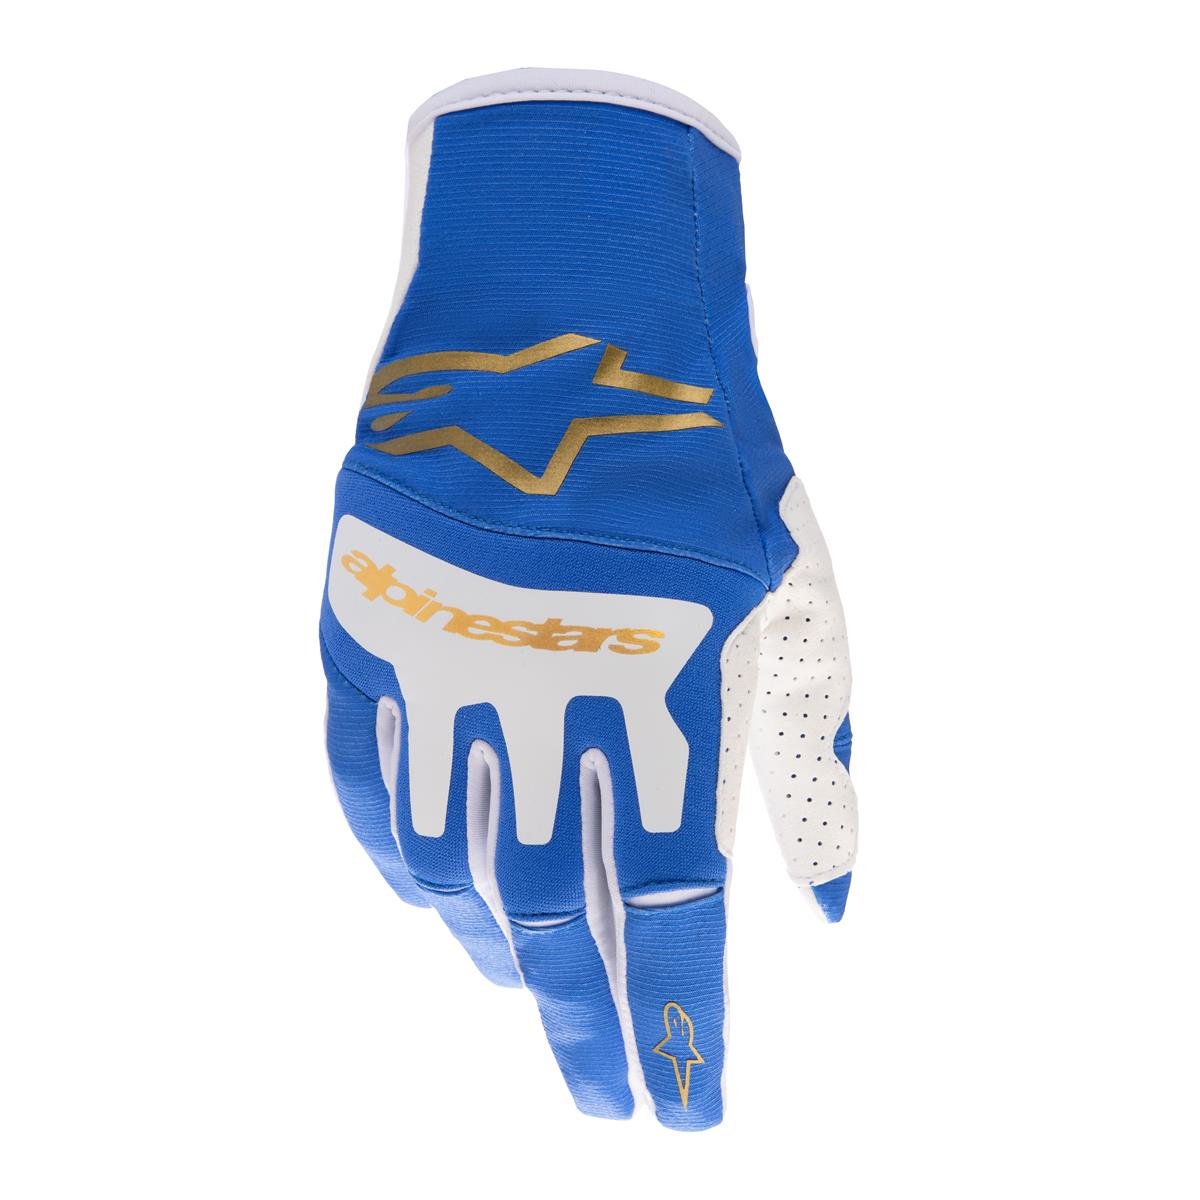 Alpinestars Handschuhe Techstar Blau/Gold